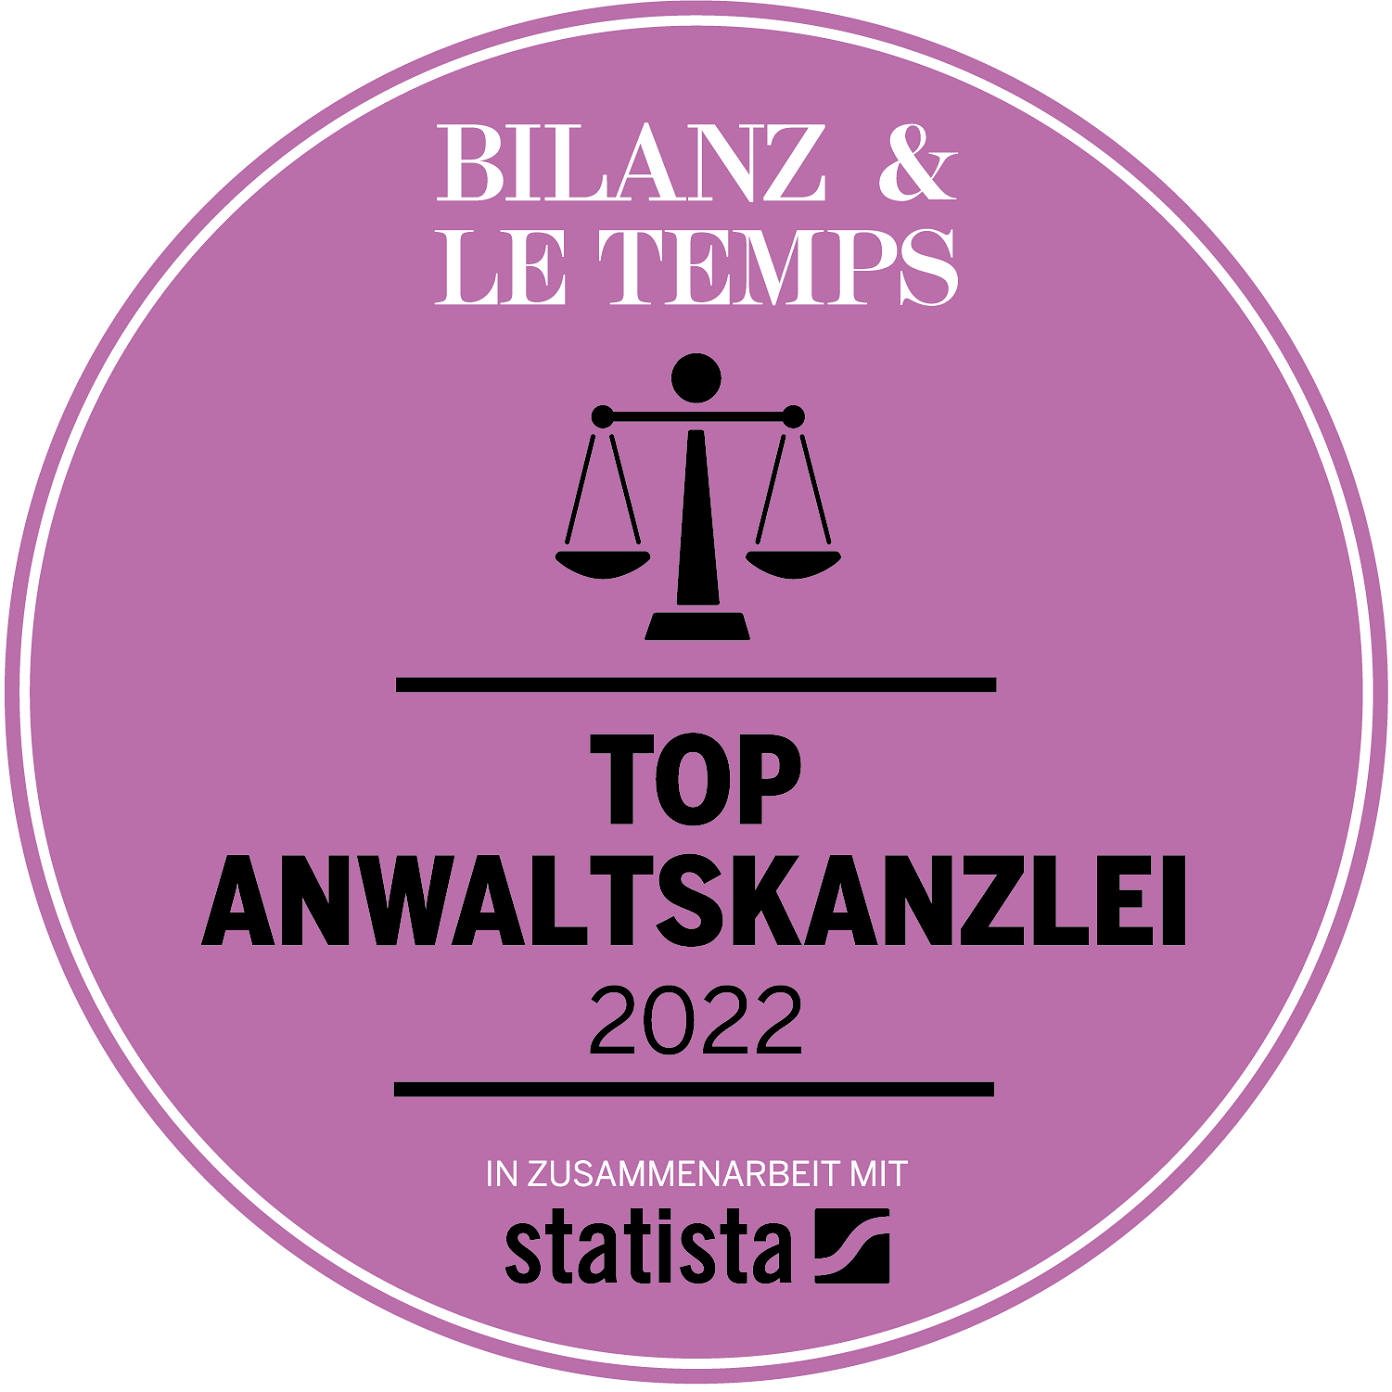 Brun & Forrer - Top Anwaltskanzlei 2022